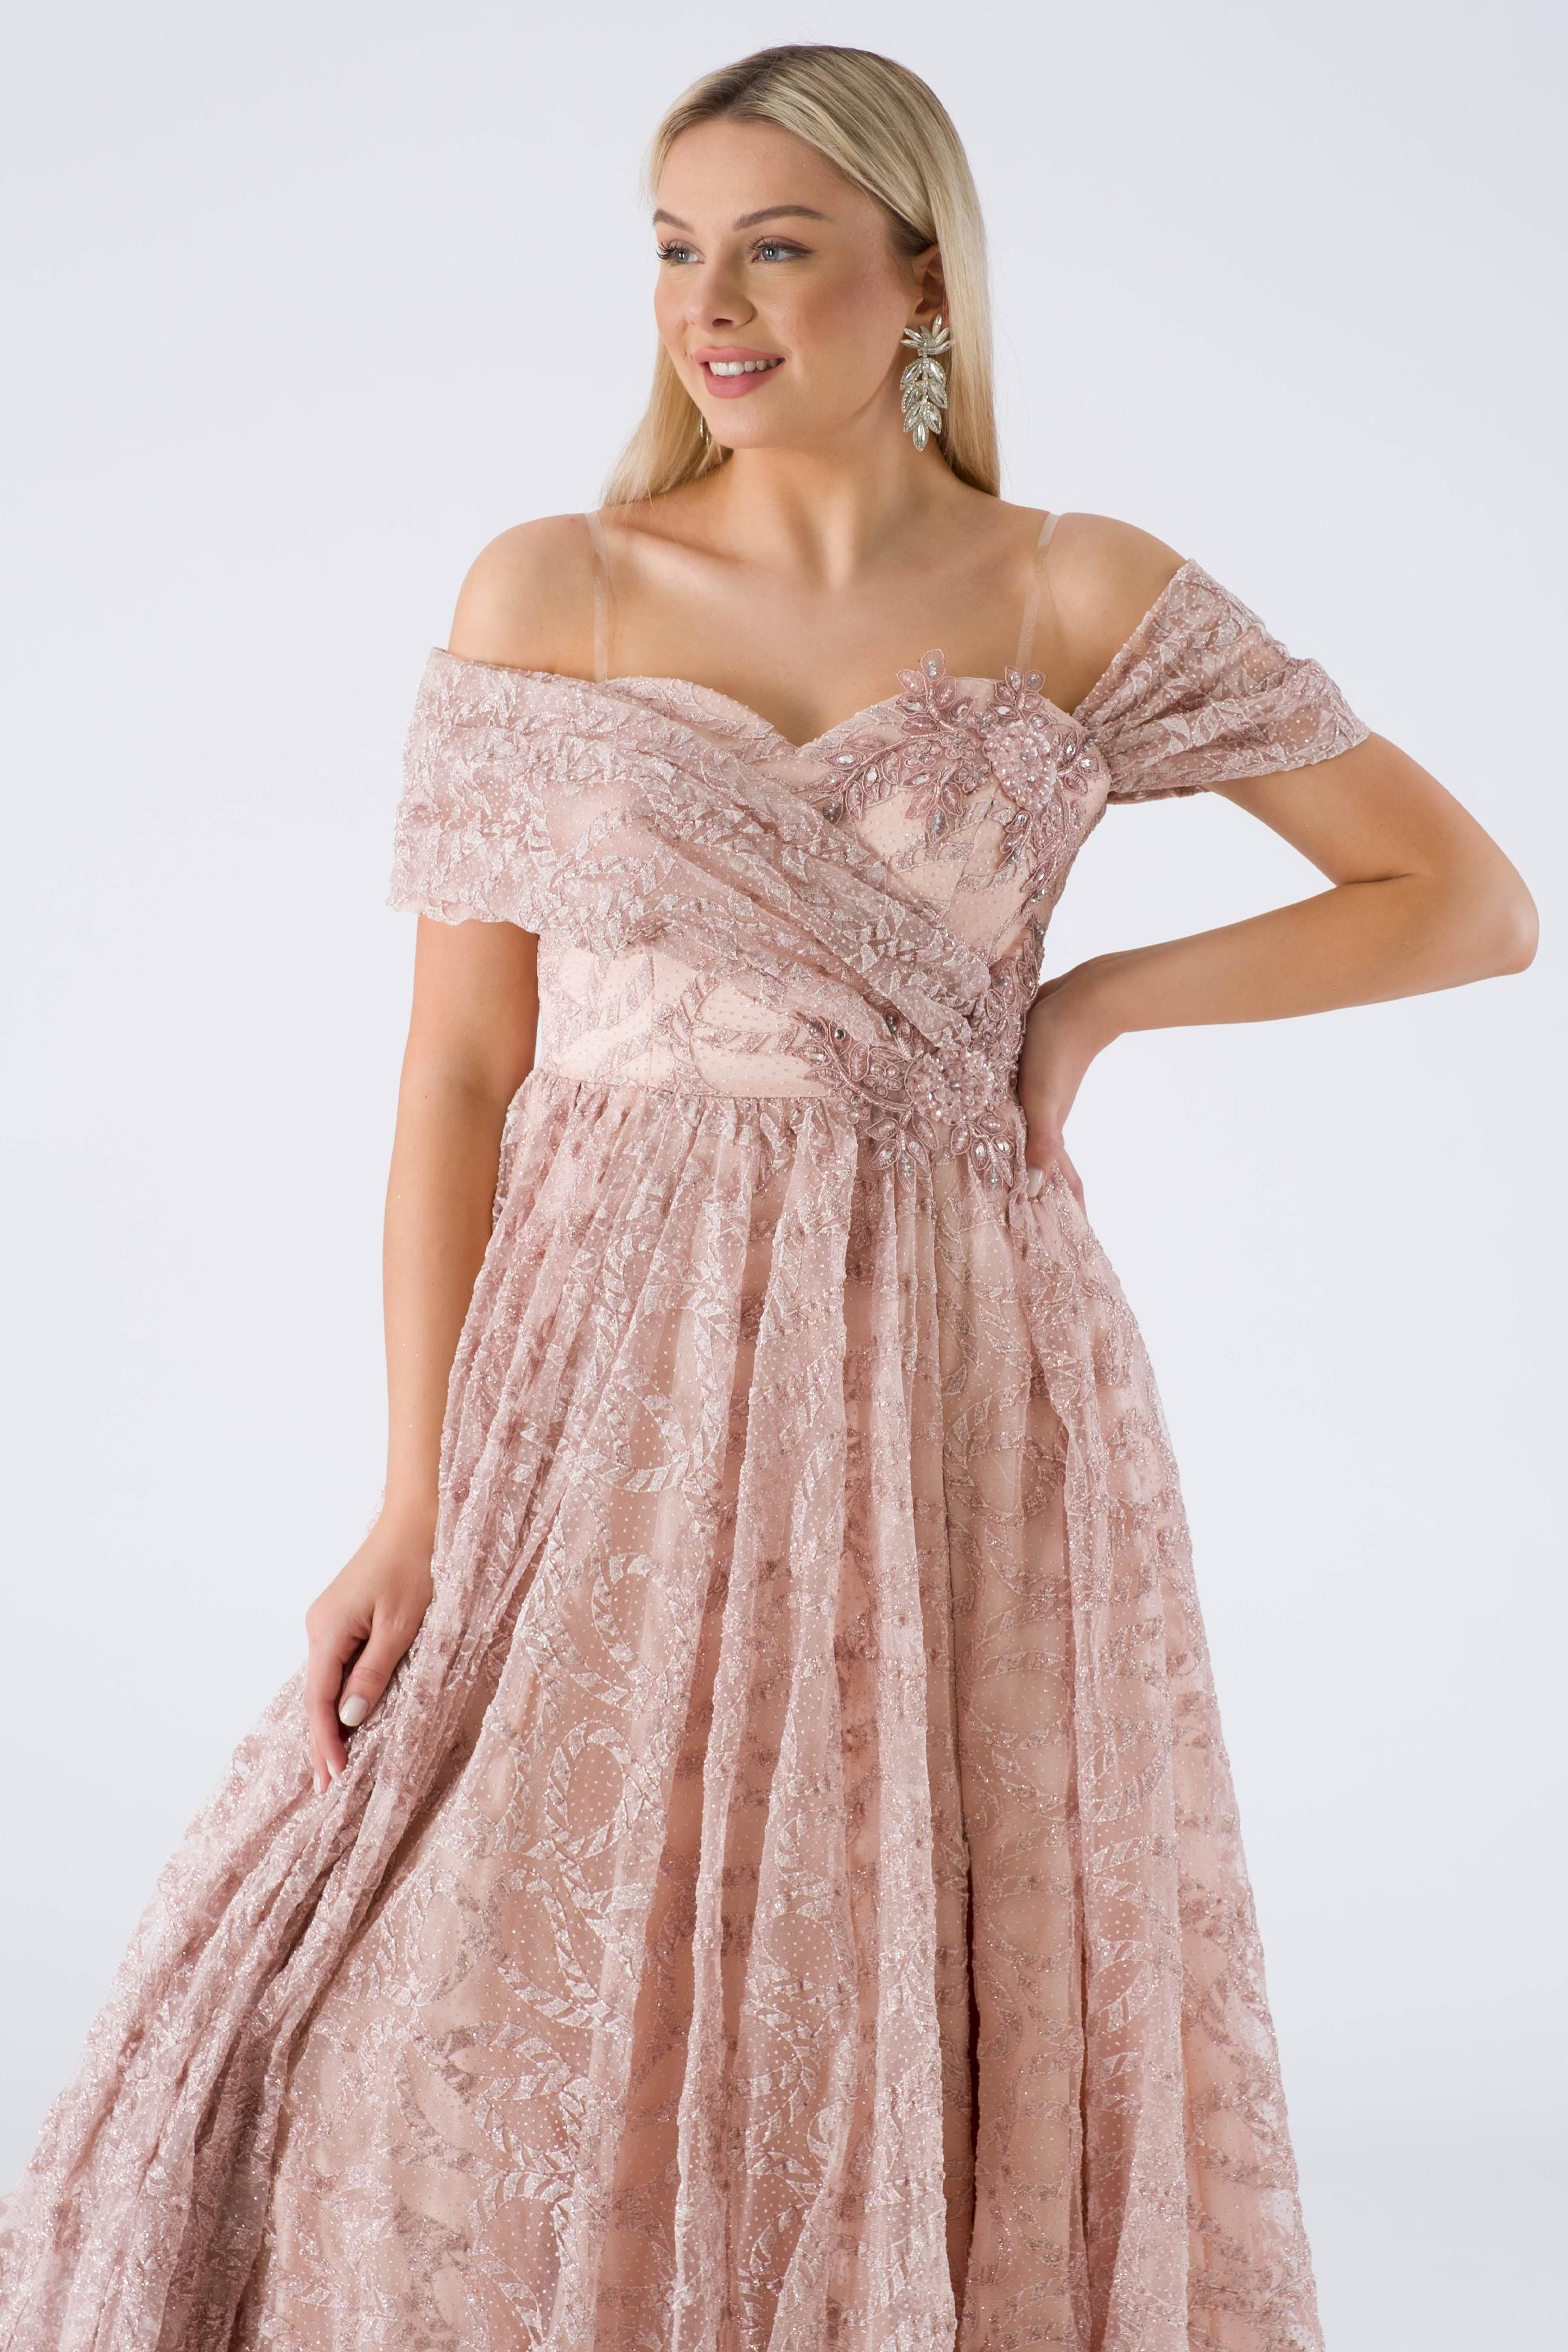 HUN | Shecca | New Season Evening Dresses